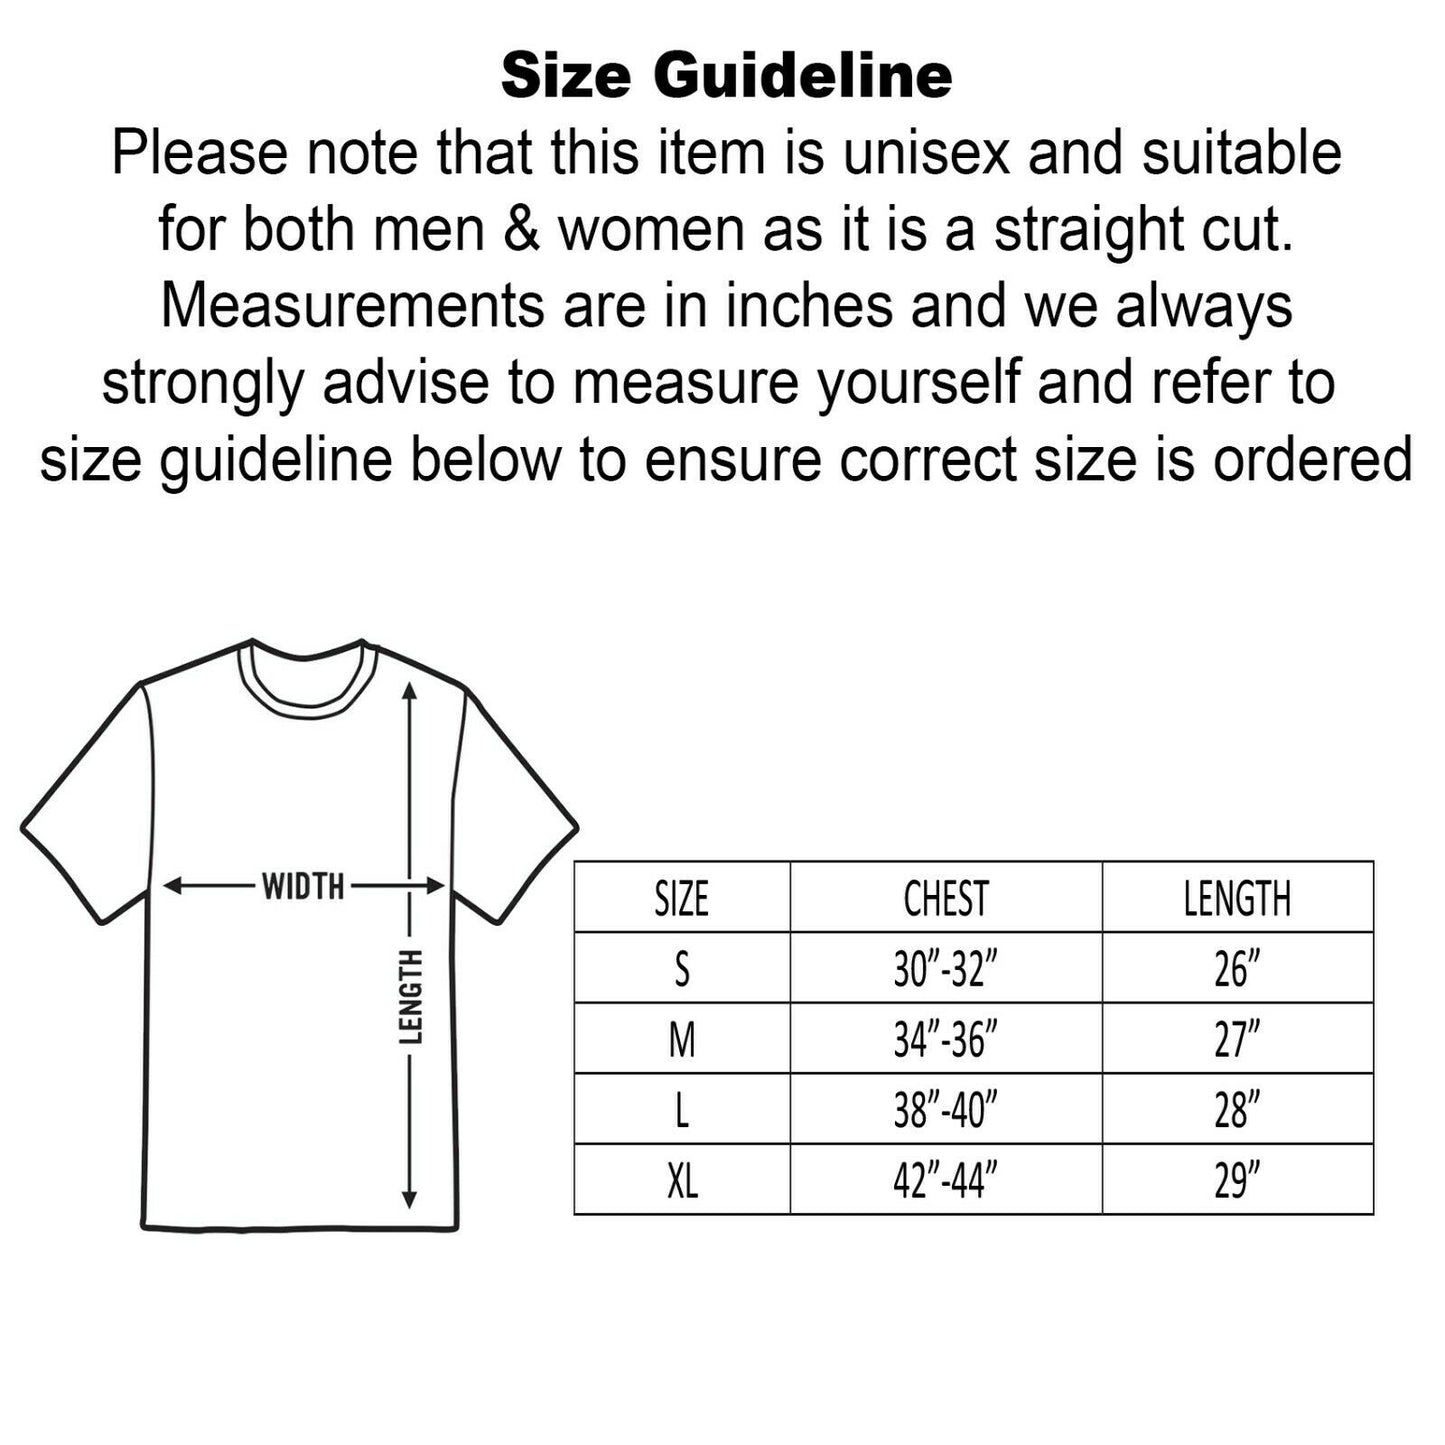 Unisex Giraffe Raglan 3/4 Sleeve Baseball T-Shirt